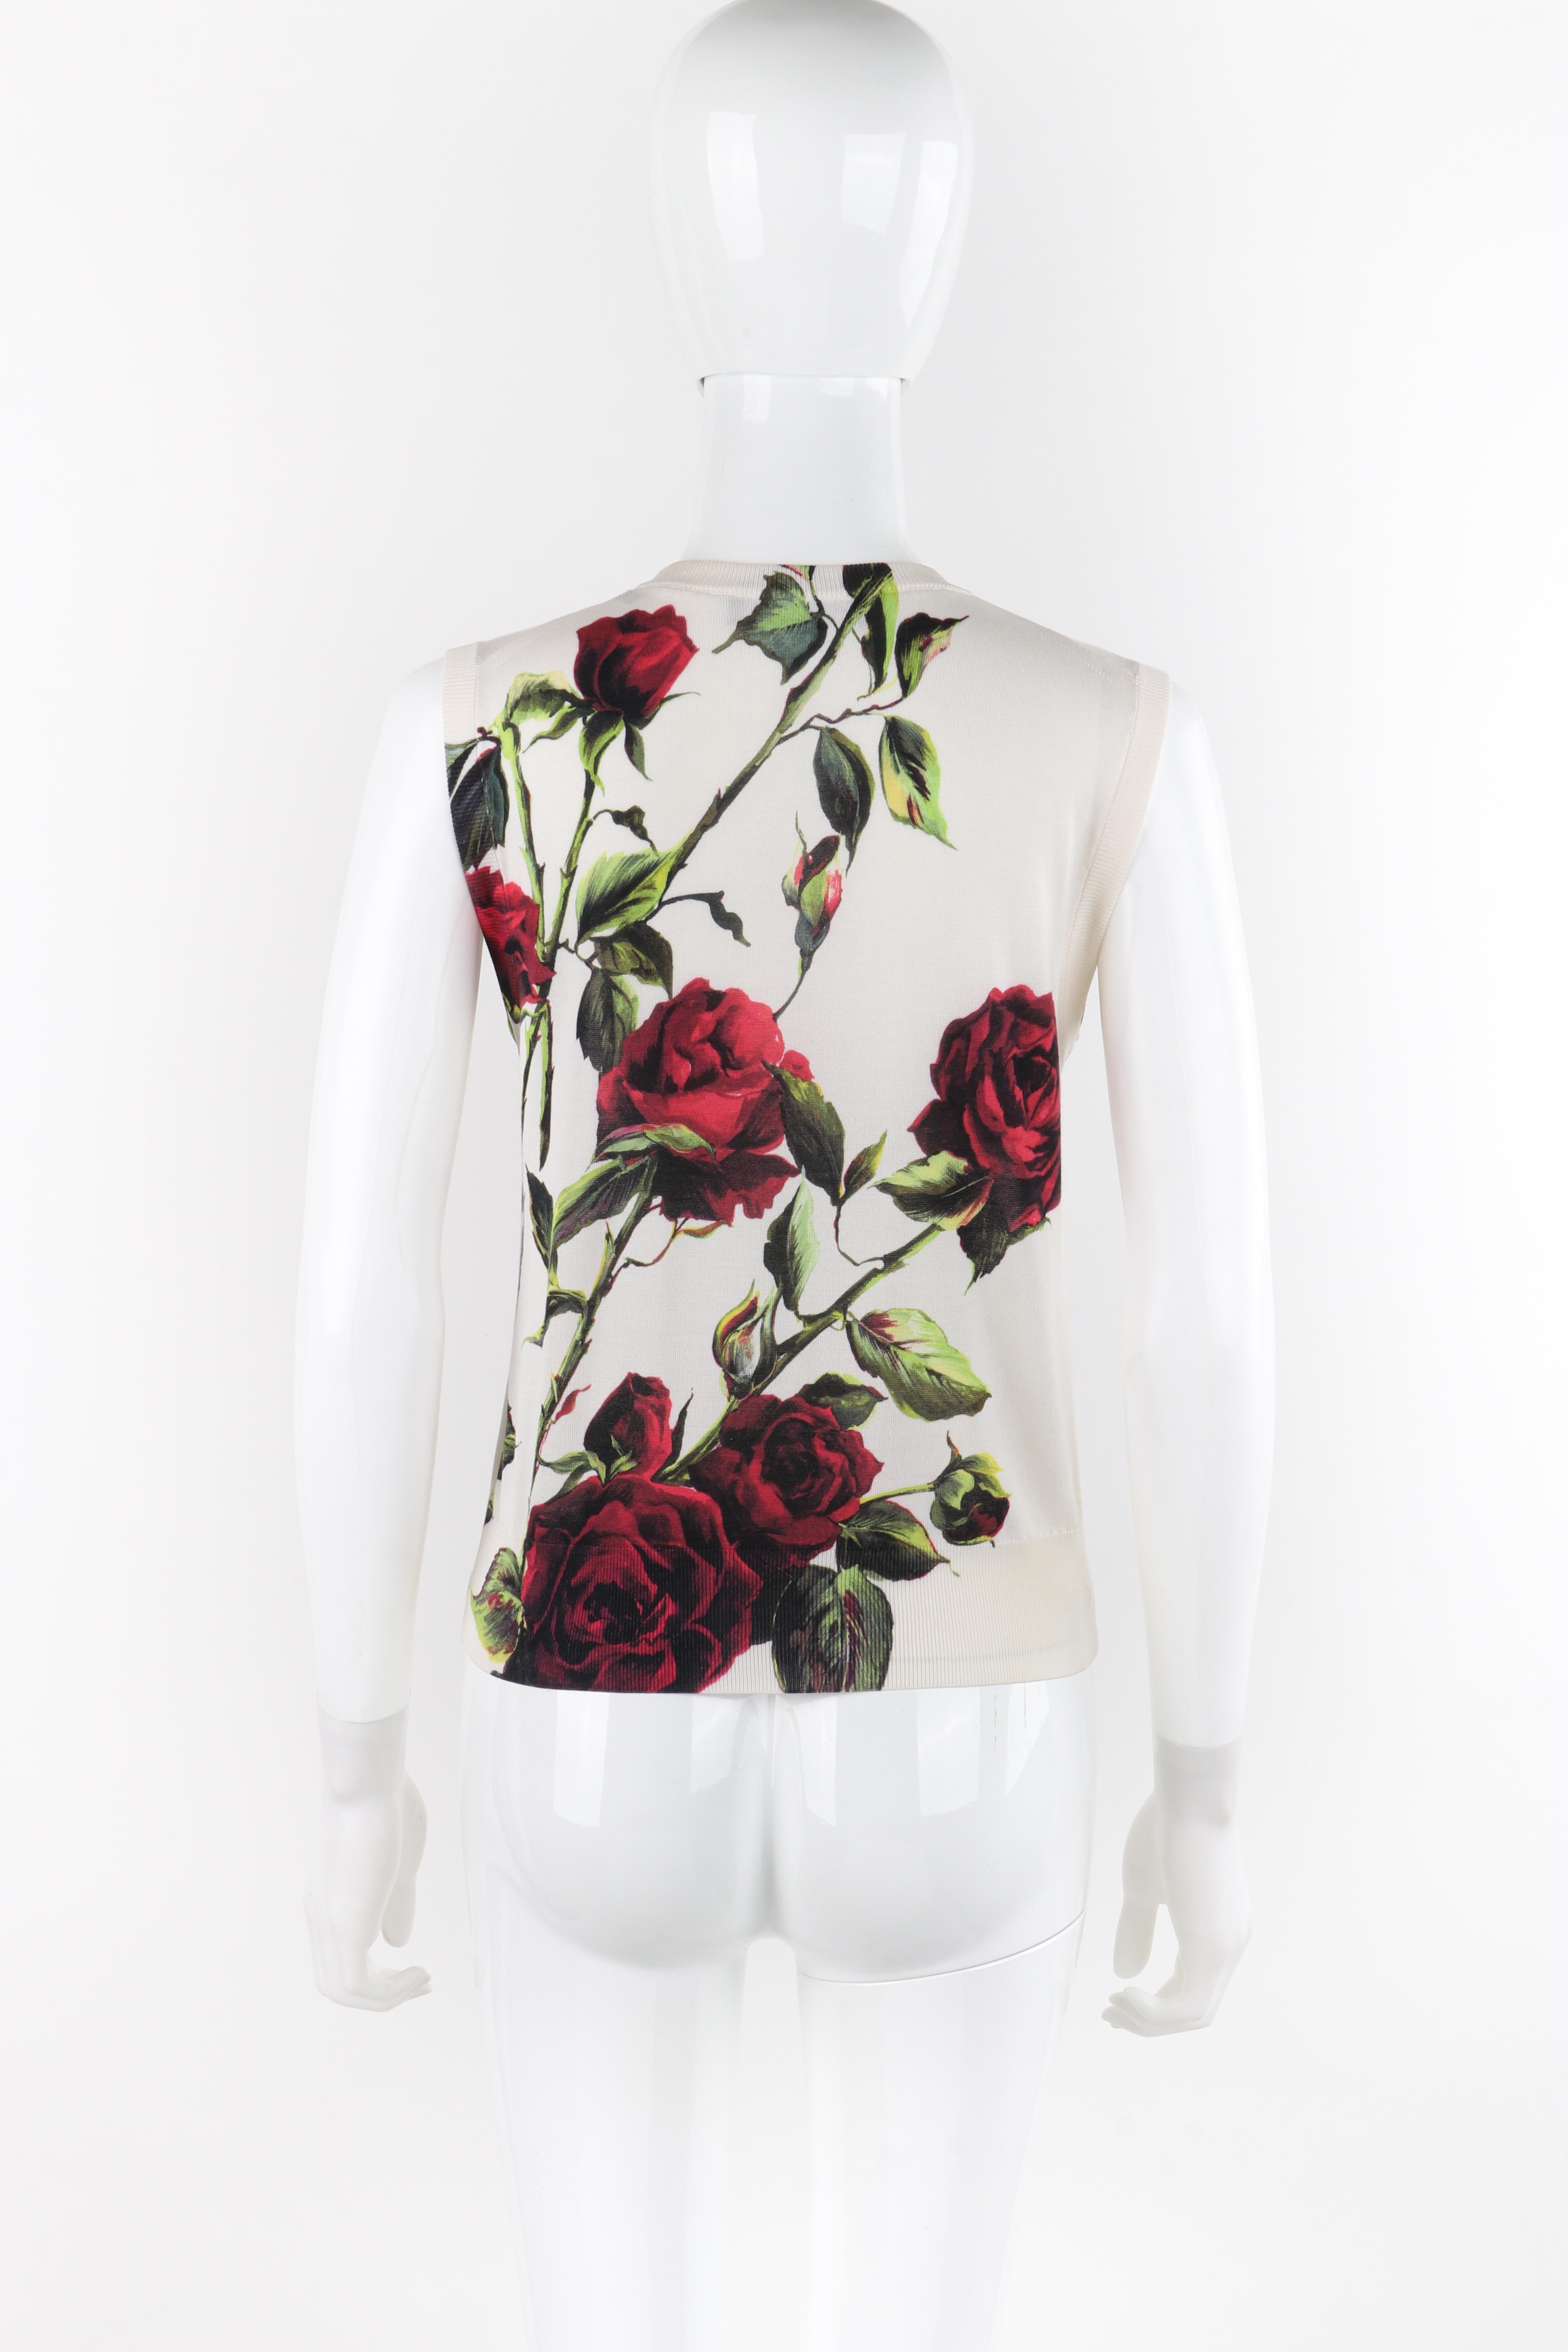 Women's DOLCE & GABBANA c.1990s Cream Multicolor Rose Print Silk Knit Sleeveless Top For Sale